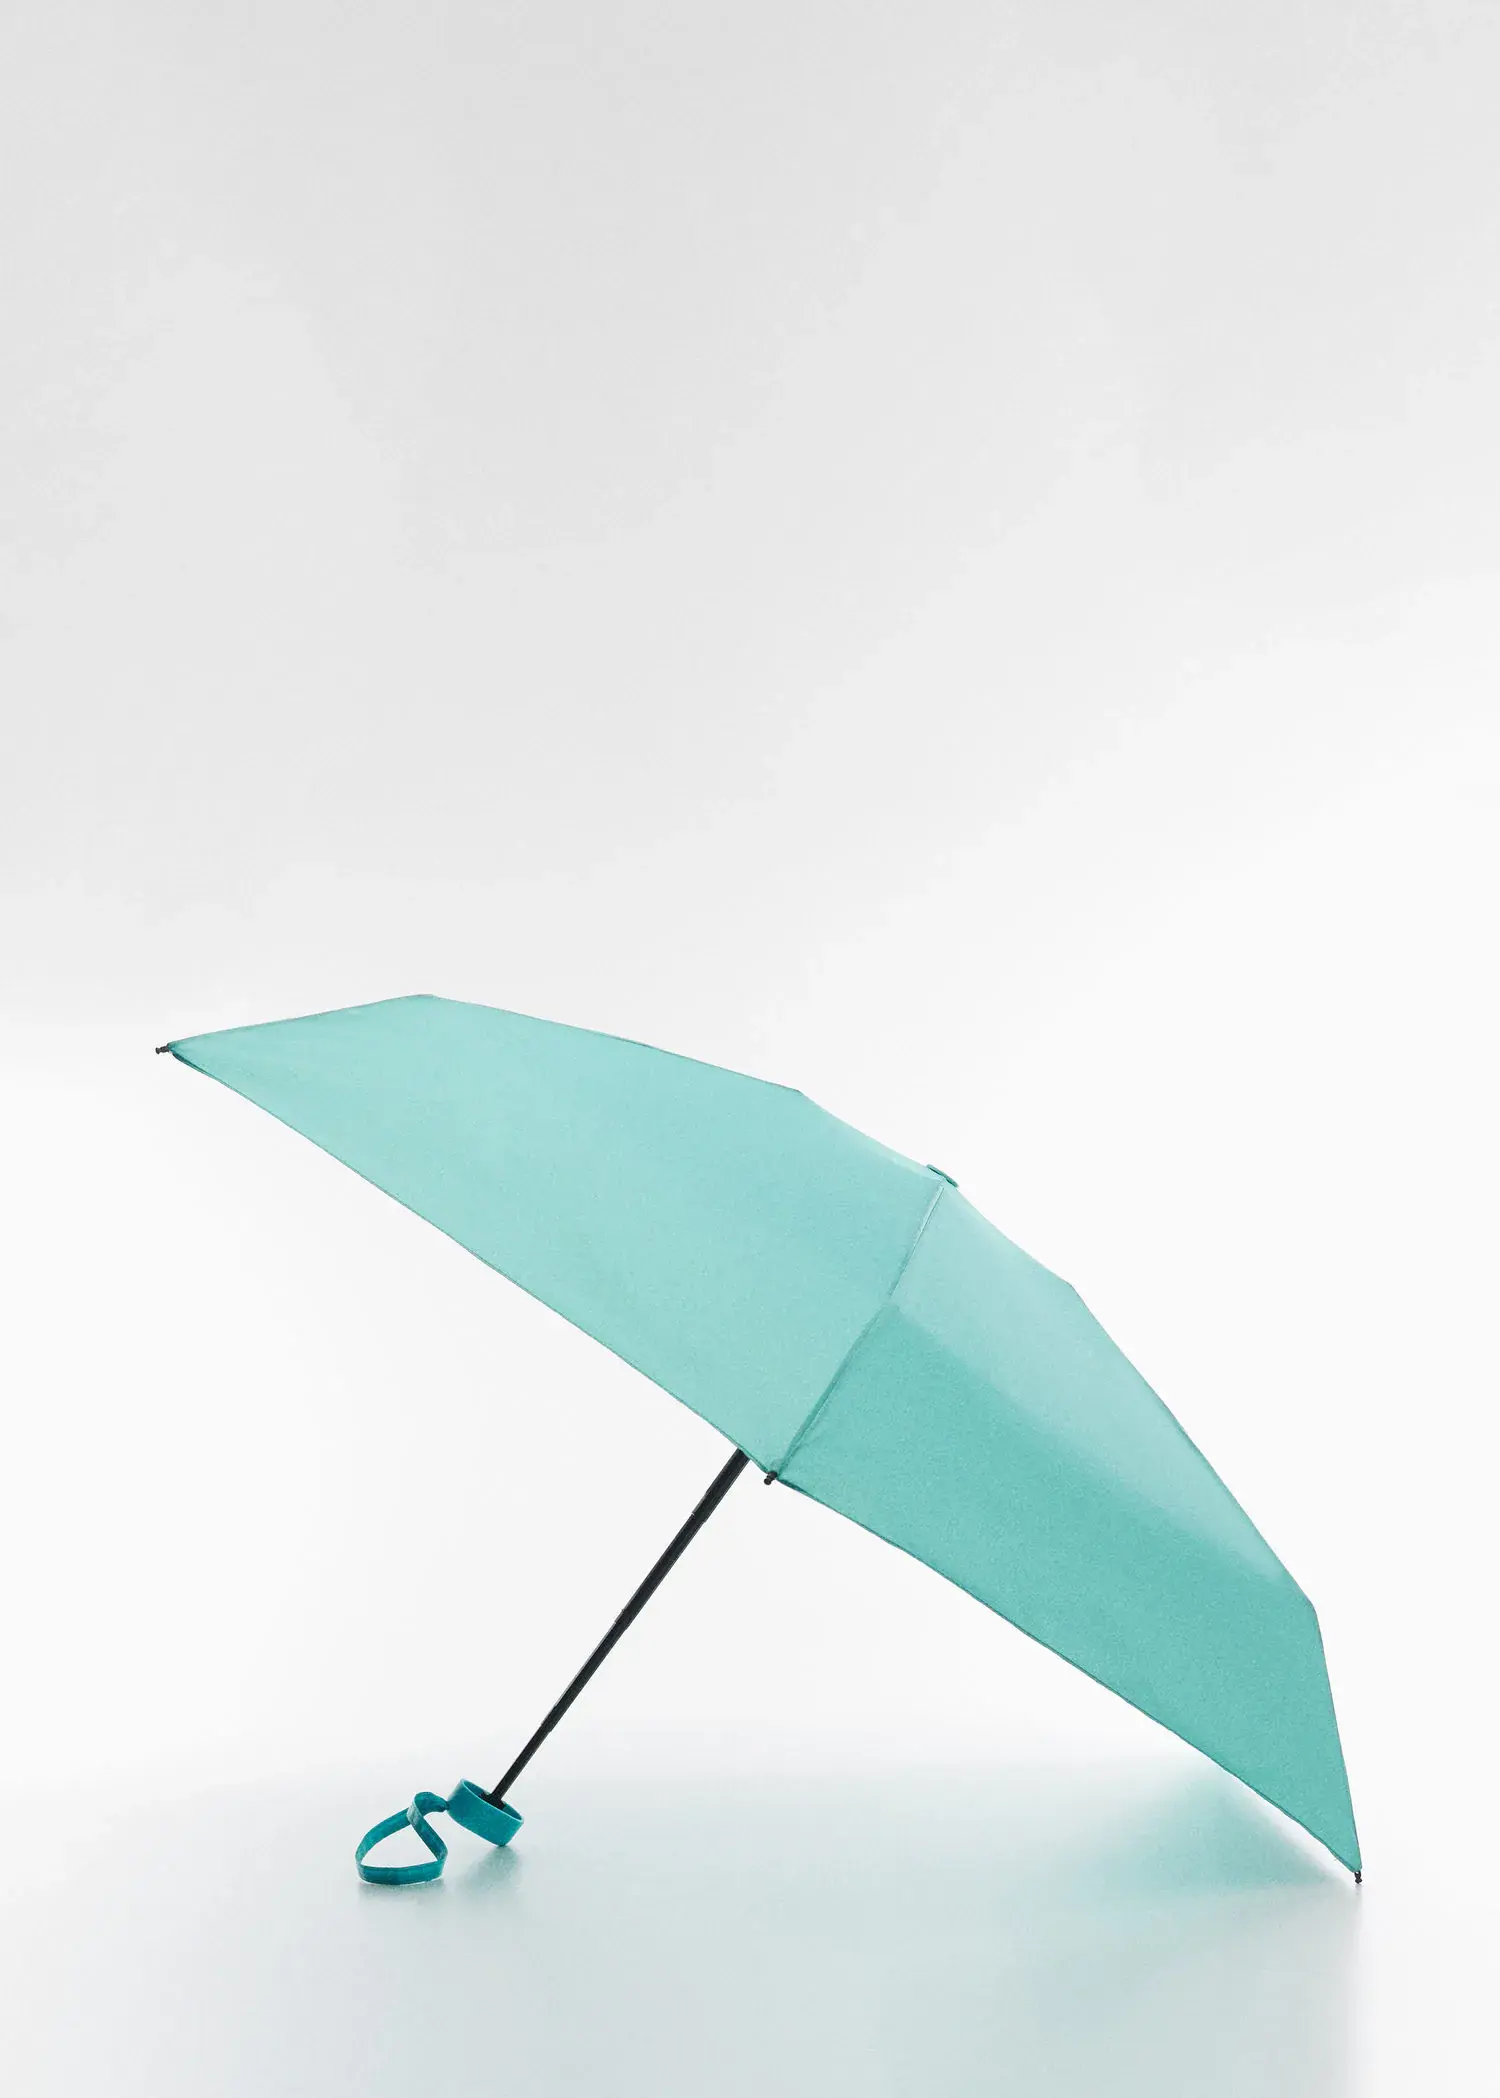 Mango Plain folding umbrella. an open umbrella is shown in the air. 